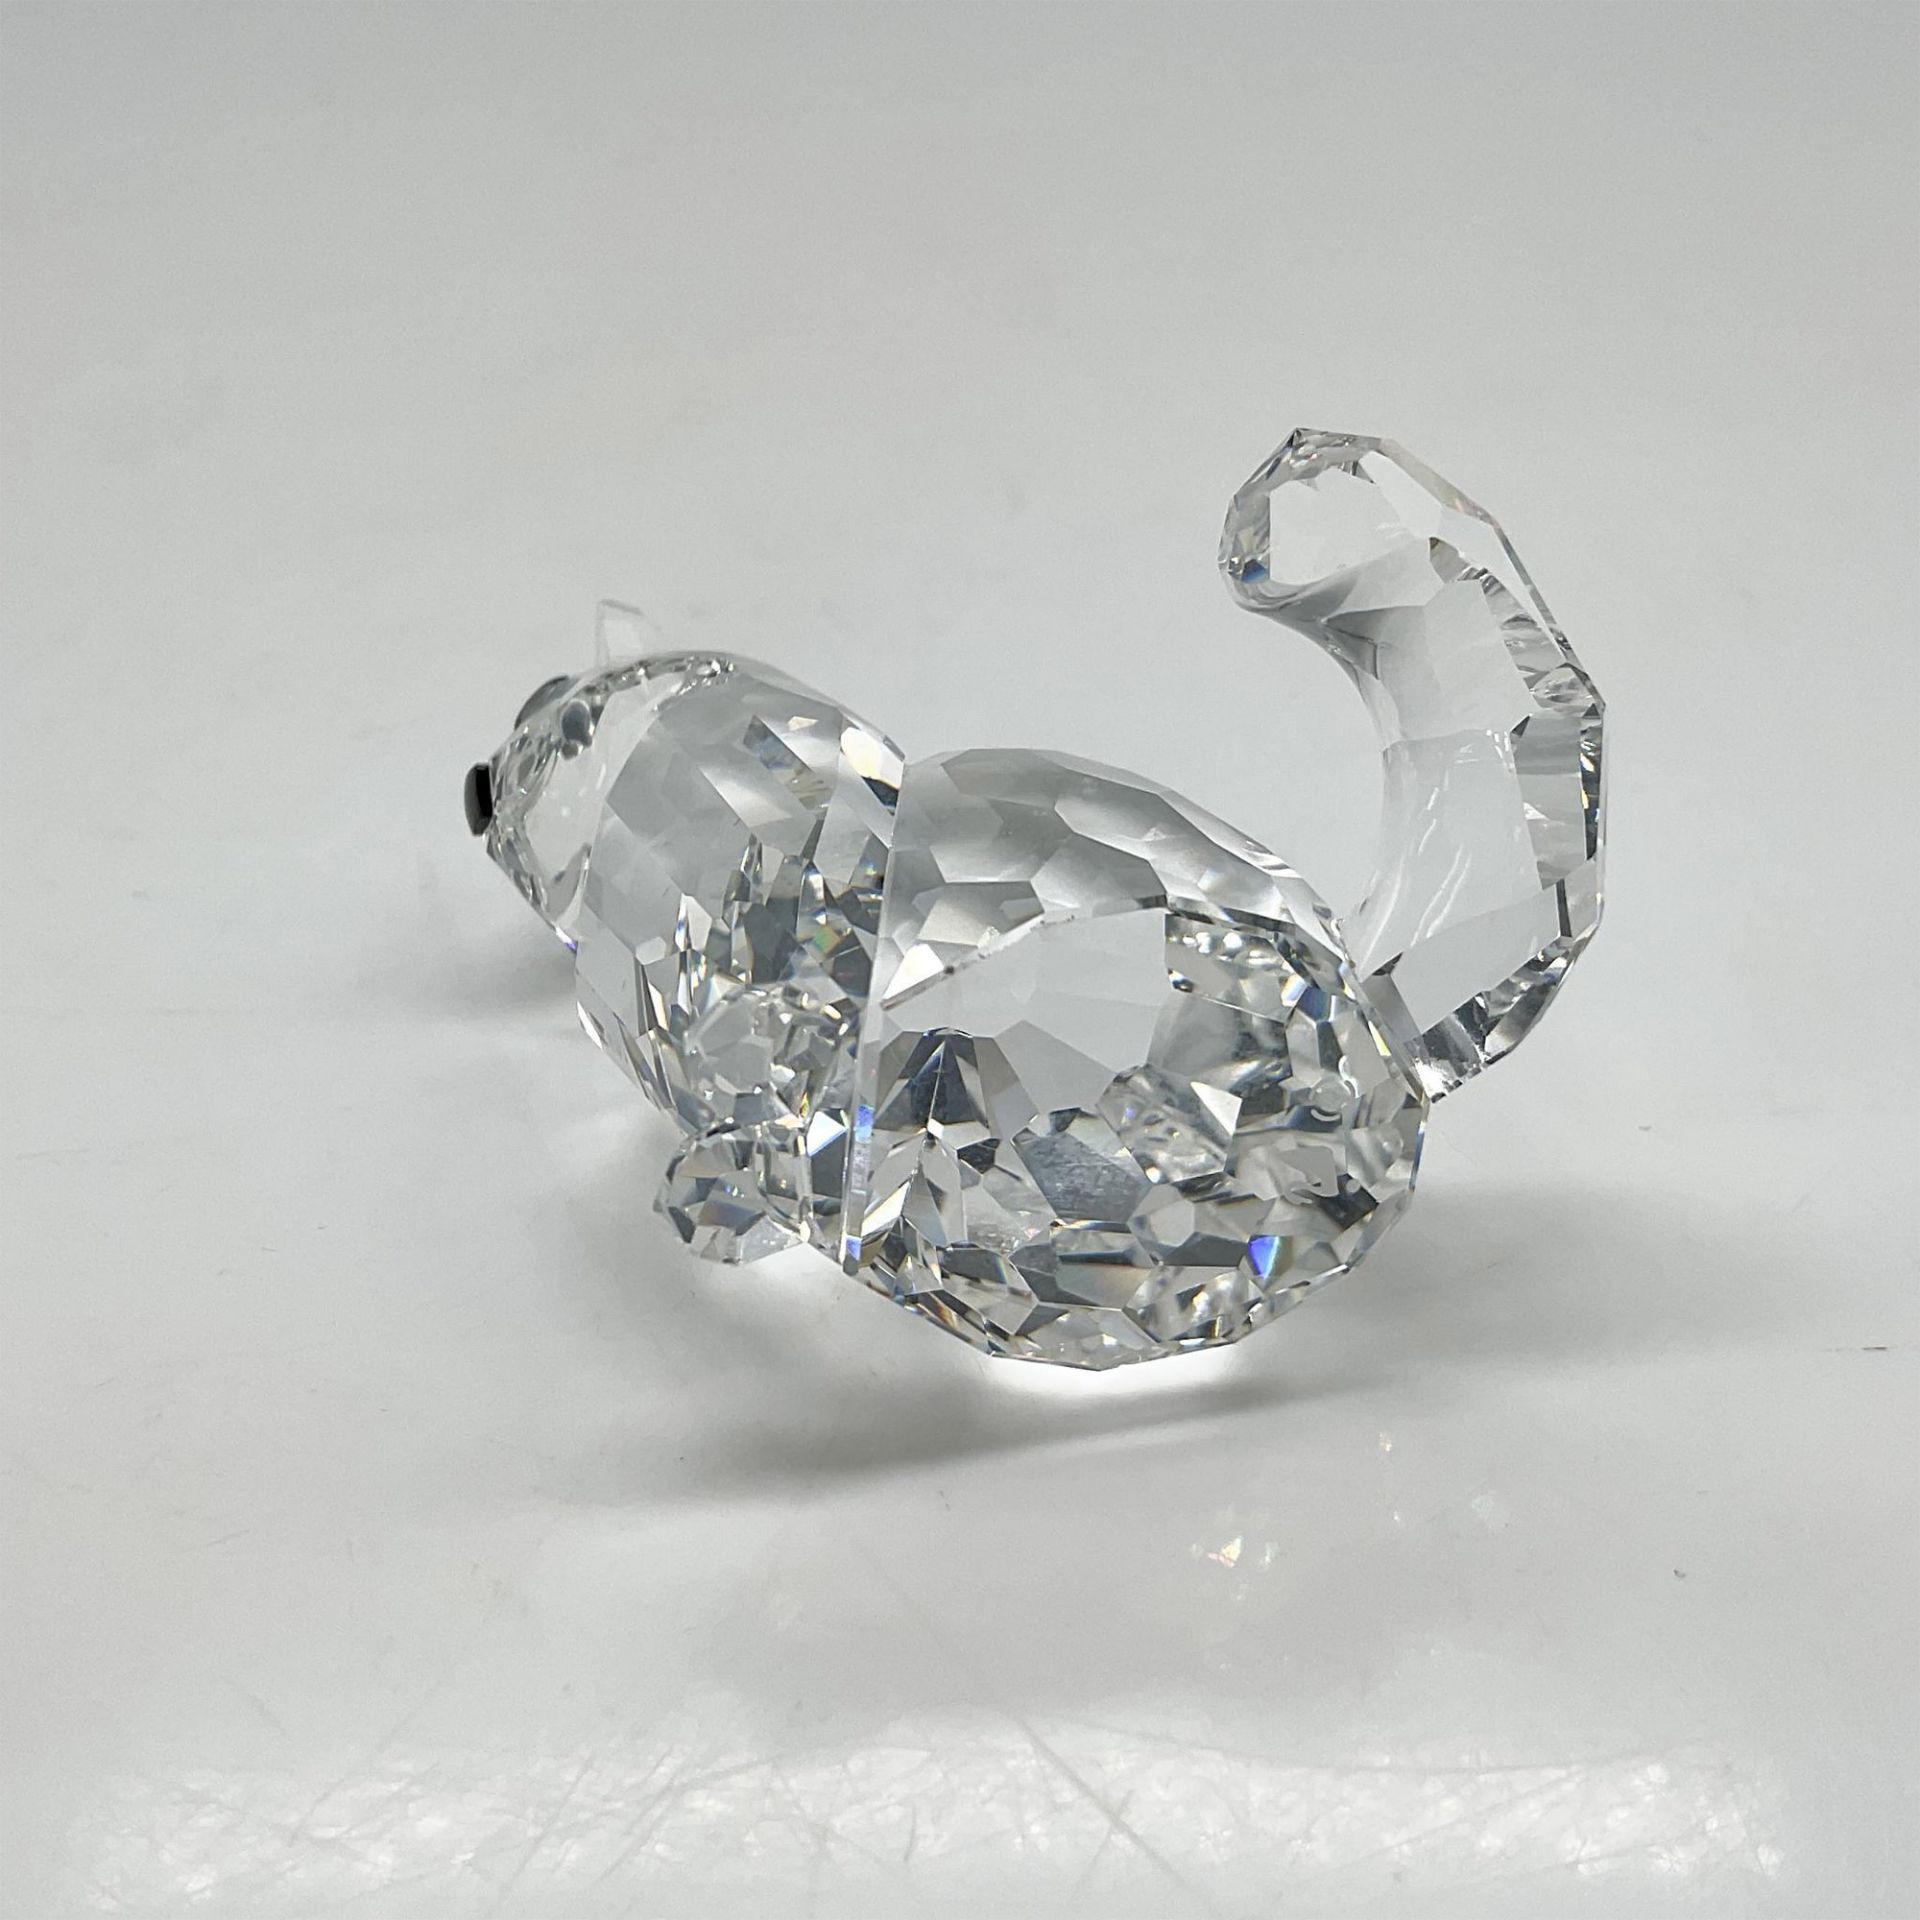 Swarovski Silver Crystal Figurine, Sitting Cat - Image 3 of 4